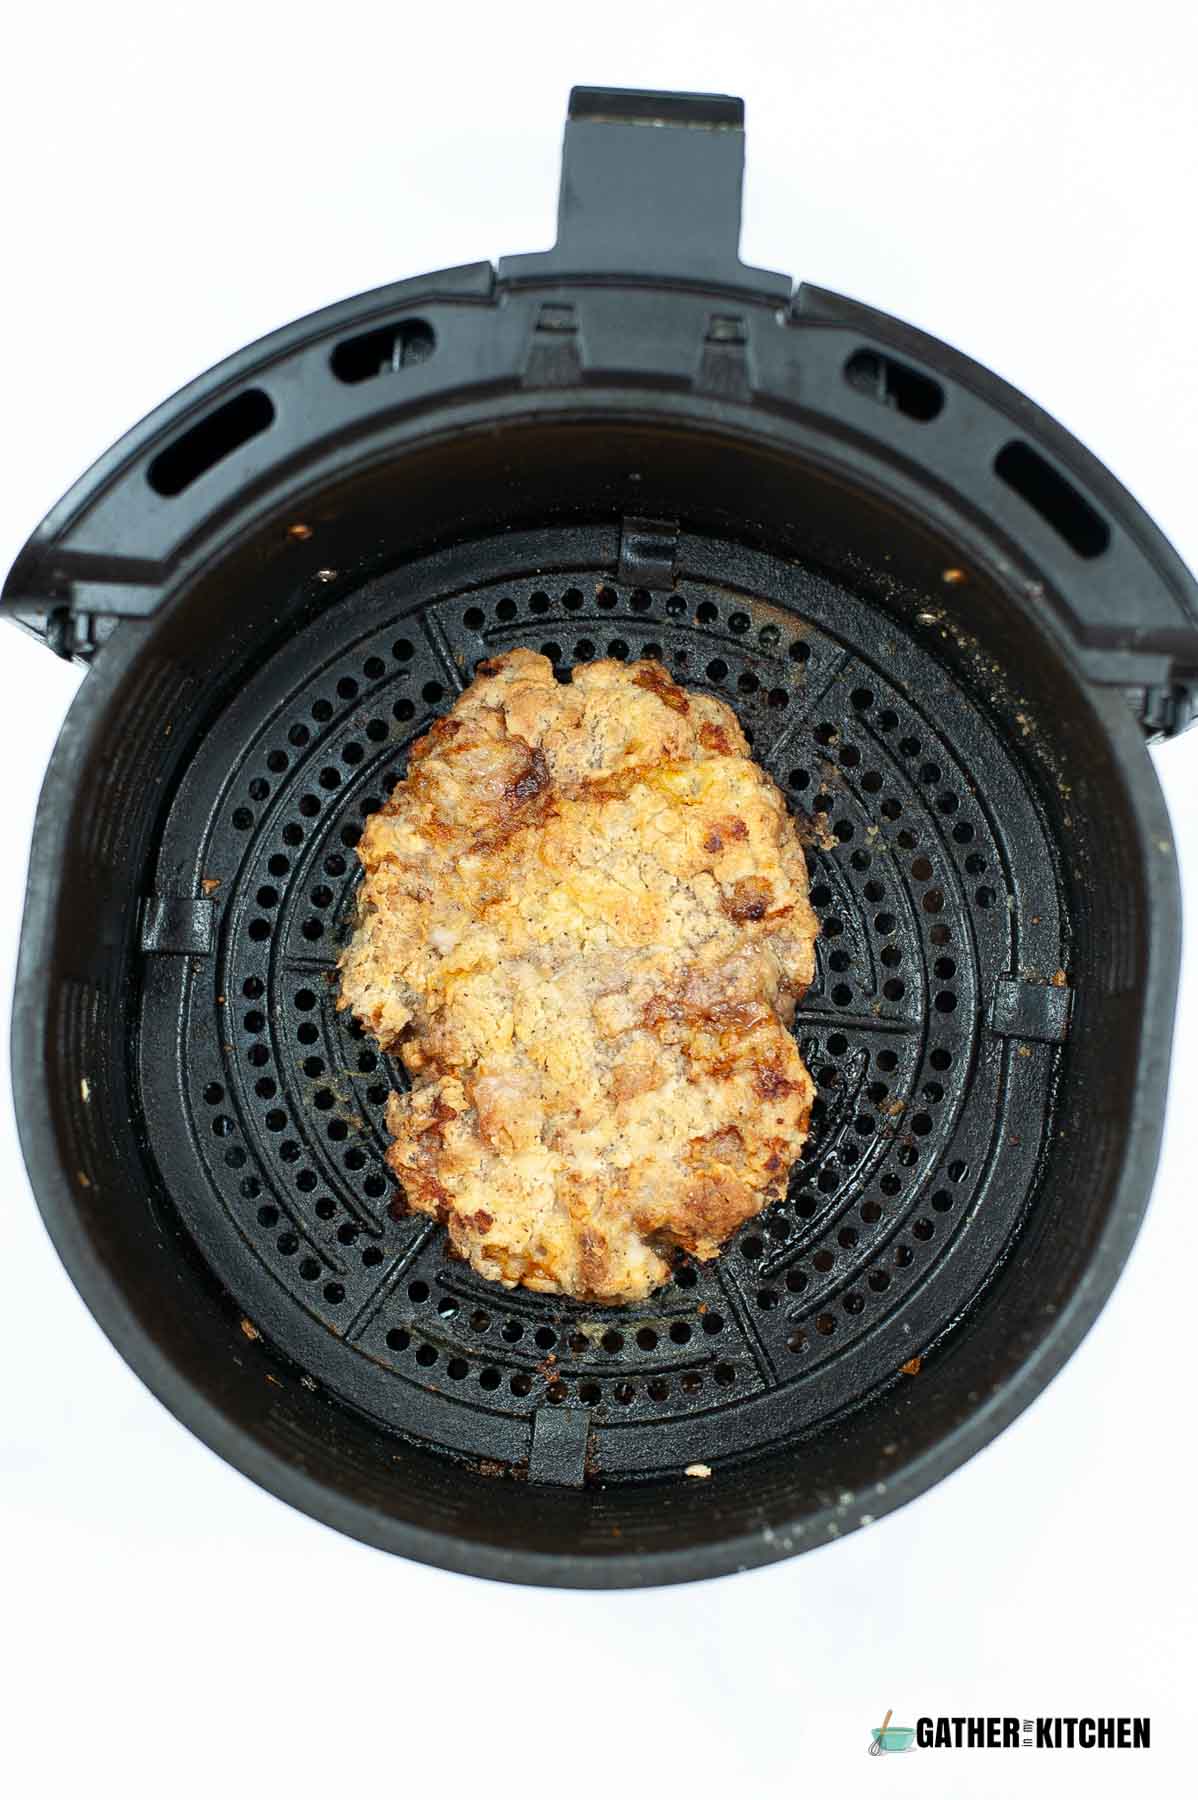 Cooked chicken fried steak in an air fryer basket.